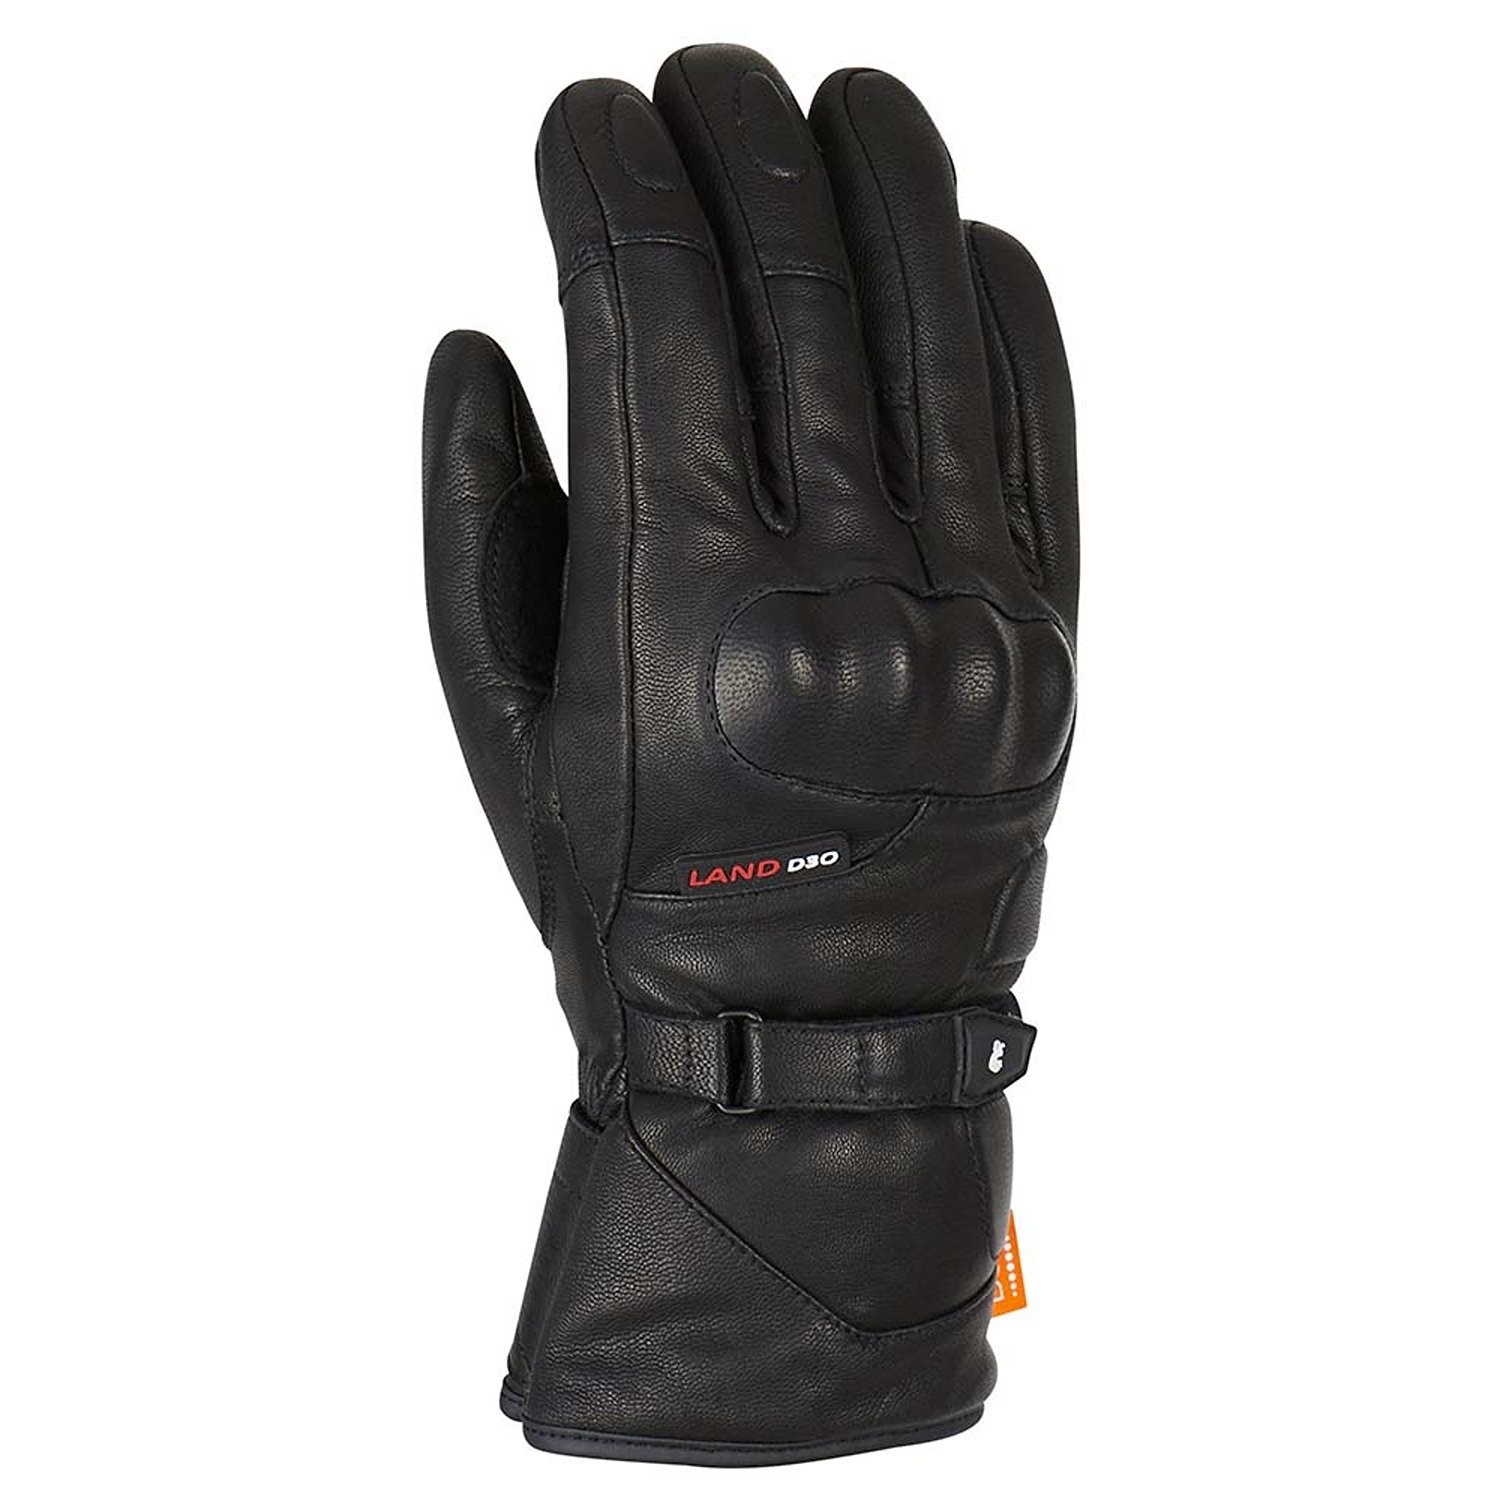 Image of Furygan Land DK D30 Gloves Black Size 3XL ID 3435980358594